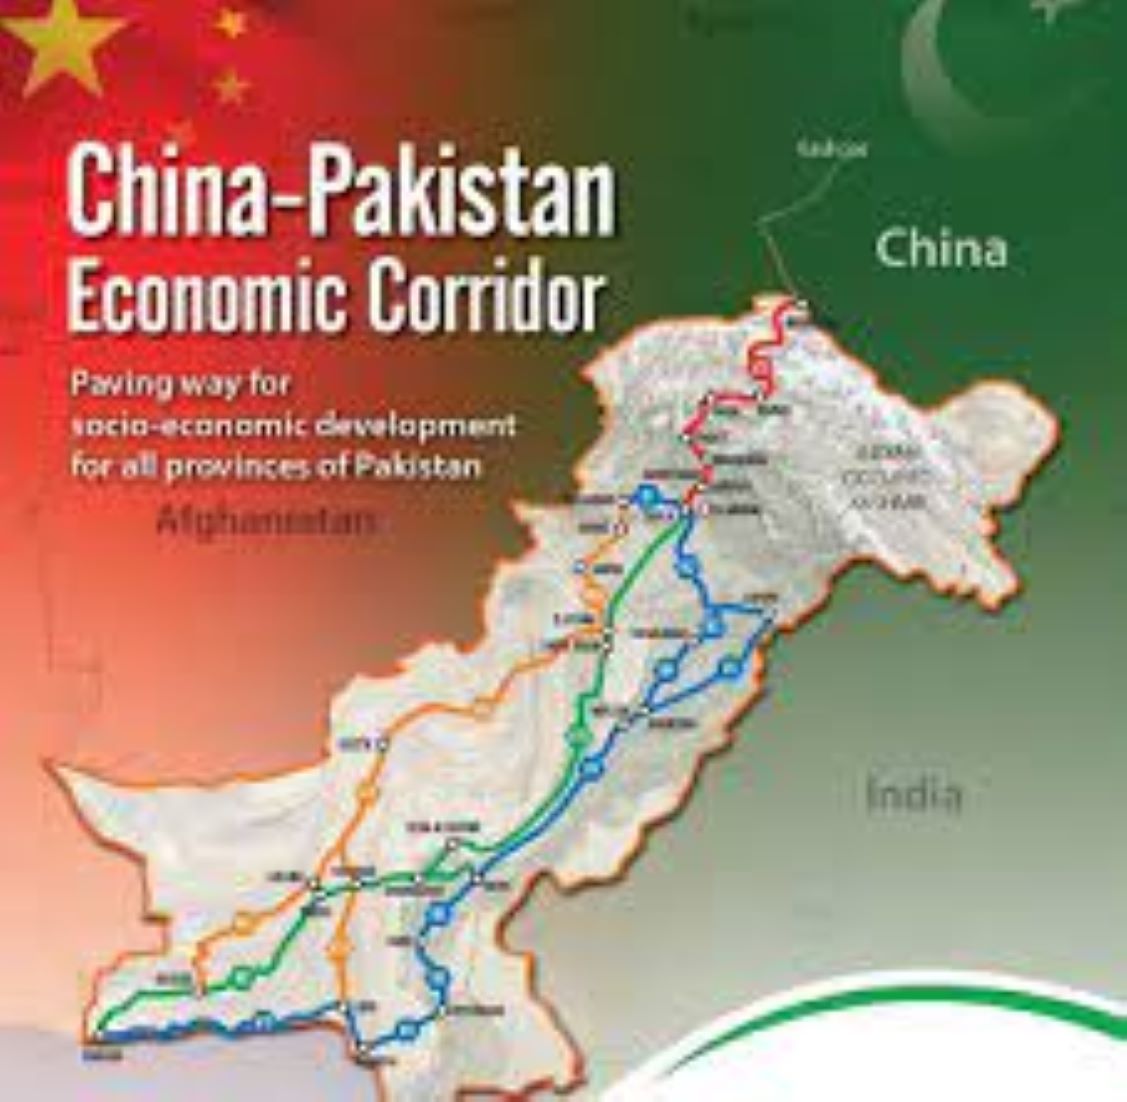 Pakistan To Develop Five Economic Corridors Under CPEC: Minister